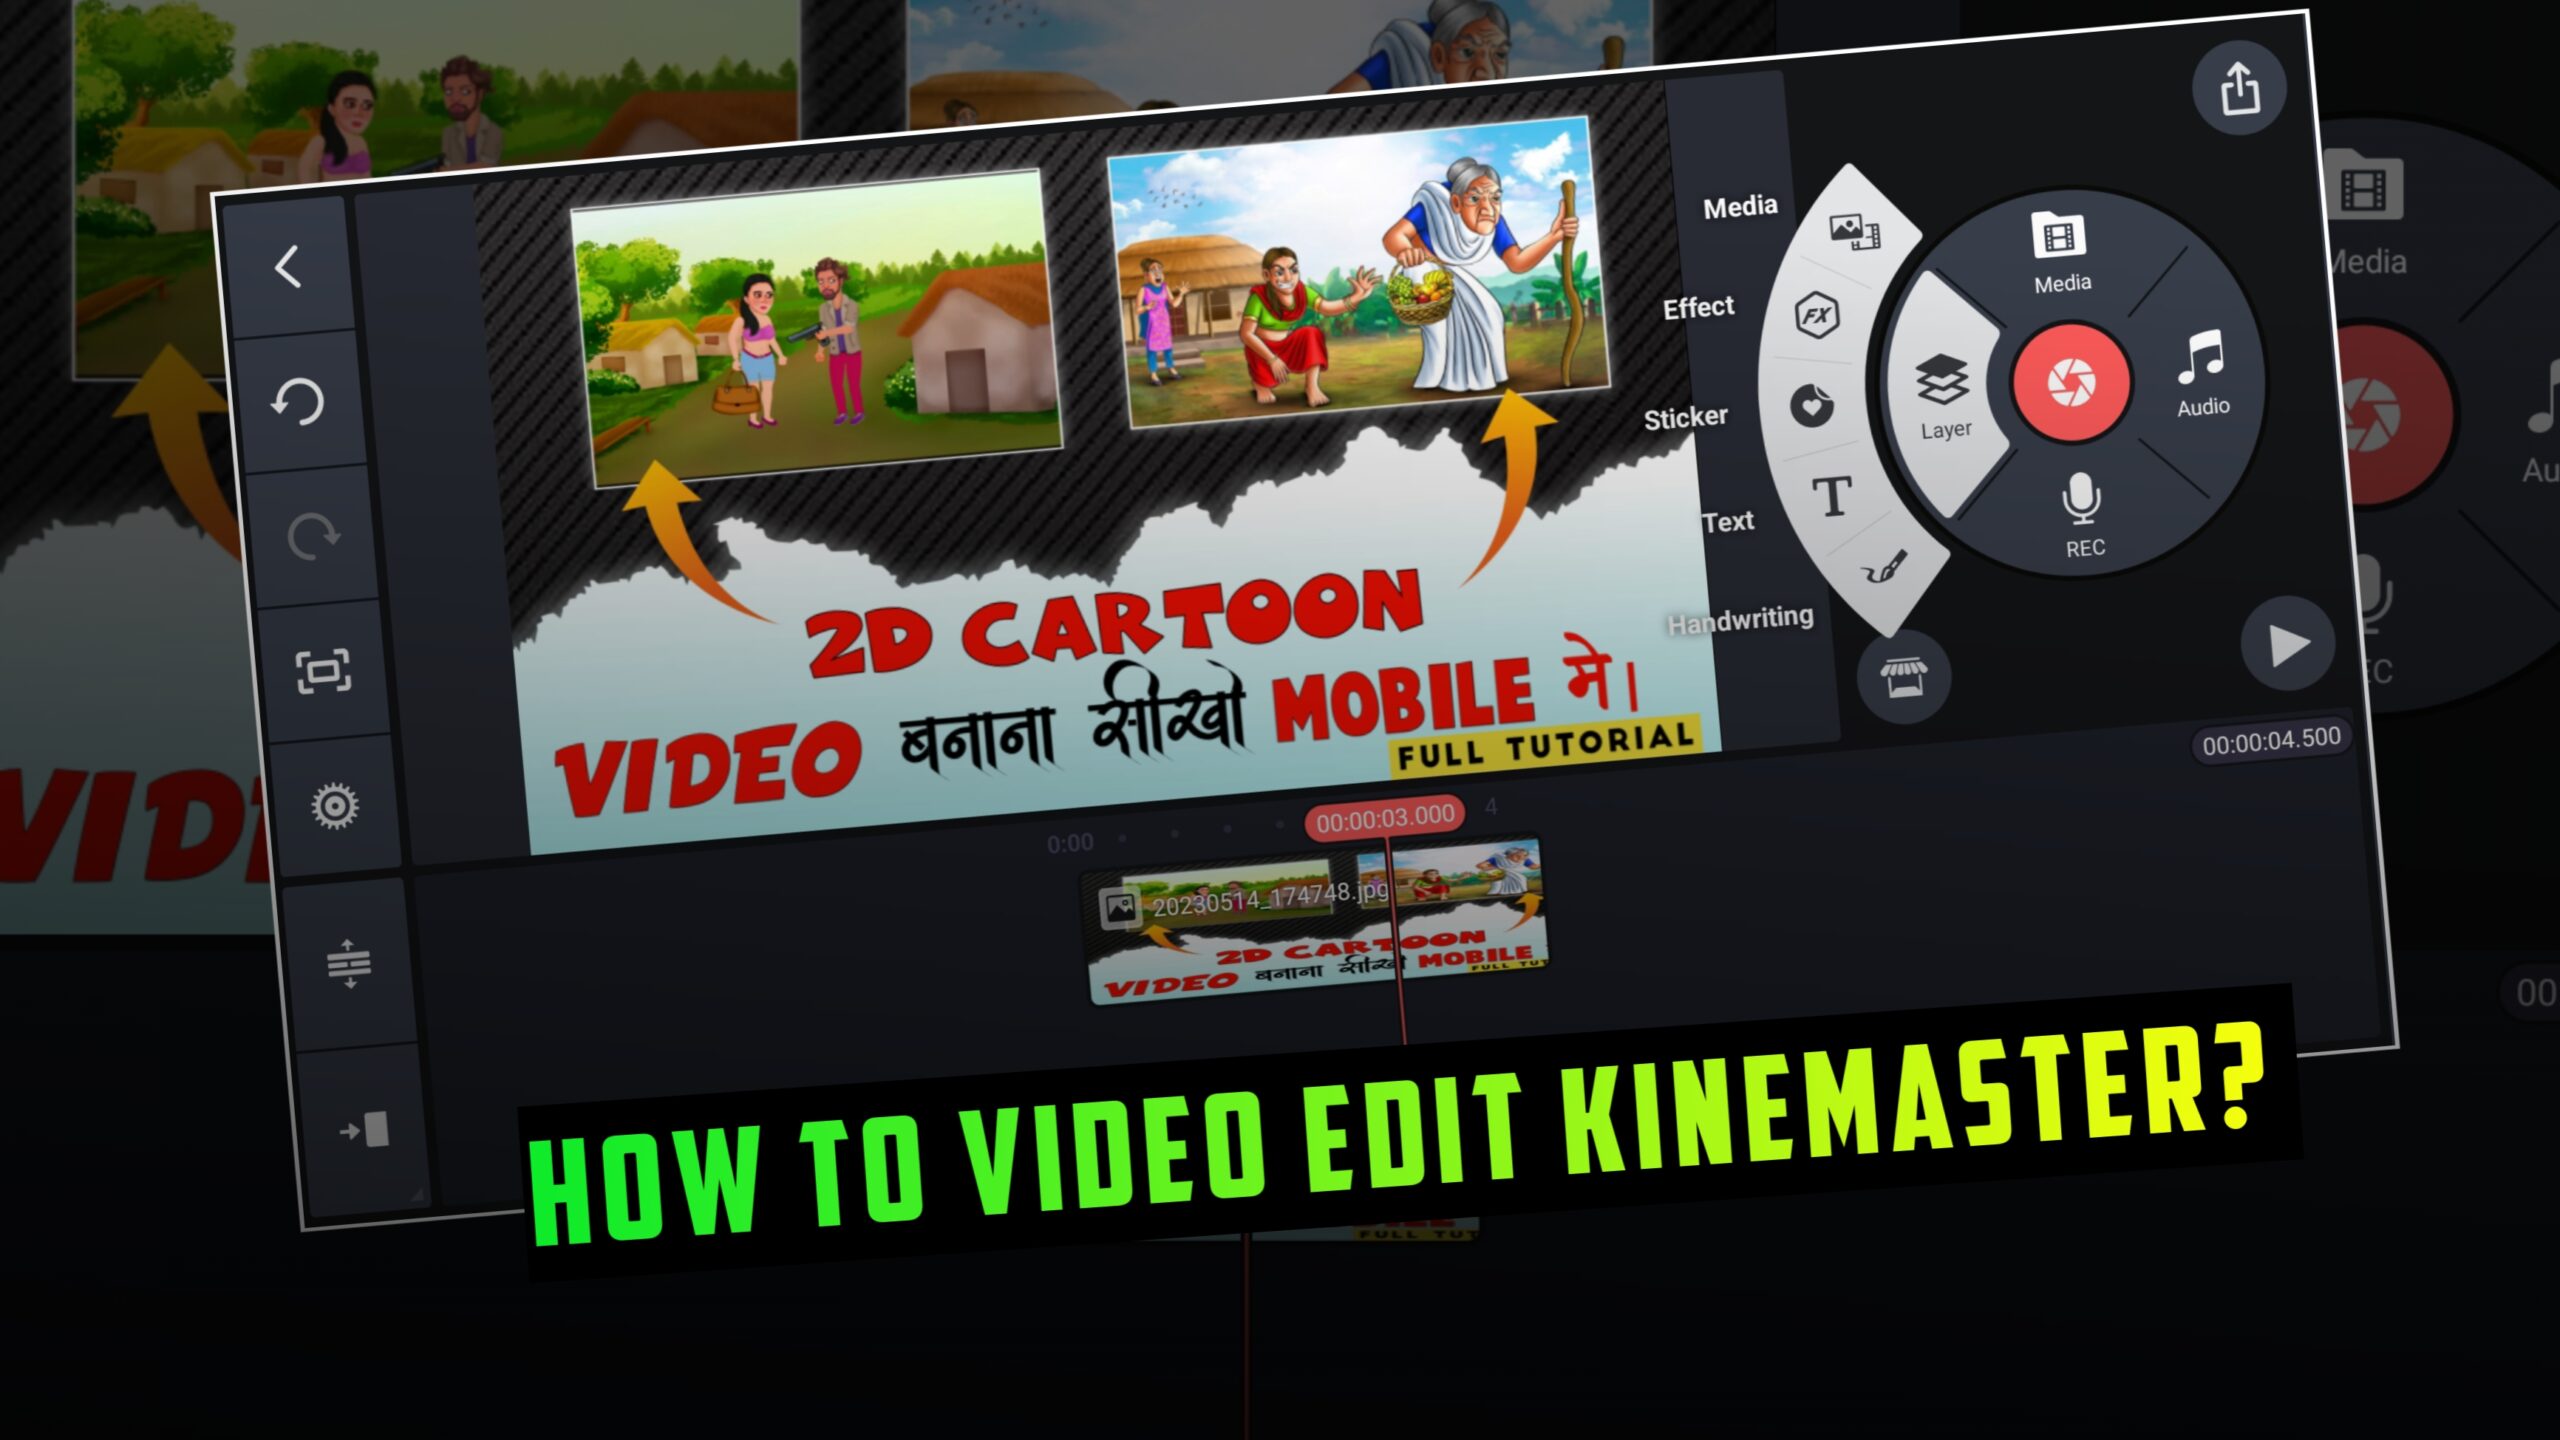 Kinemaster video editing steps